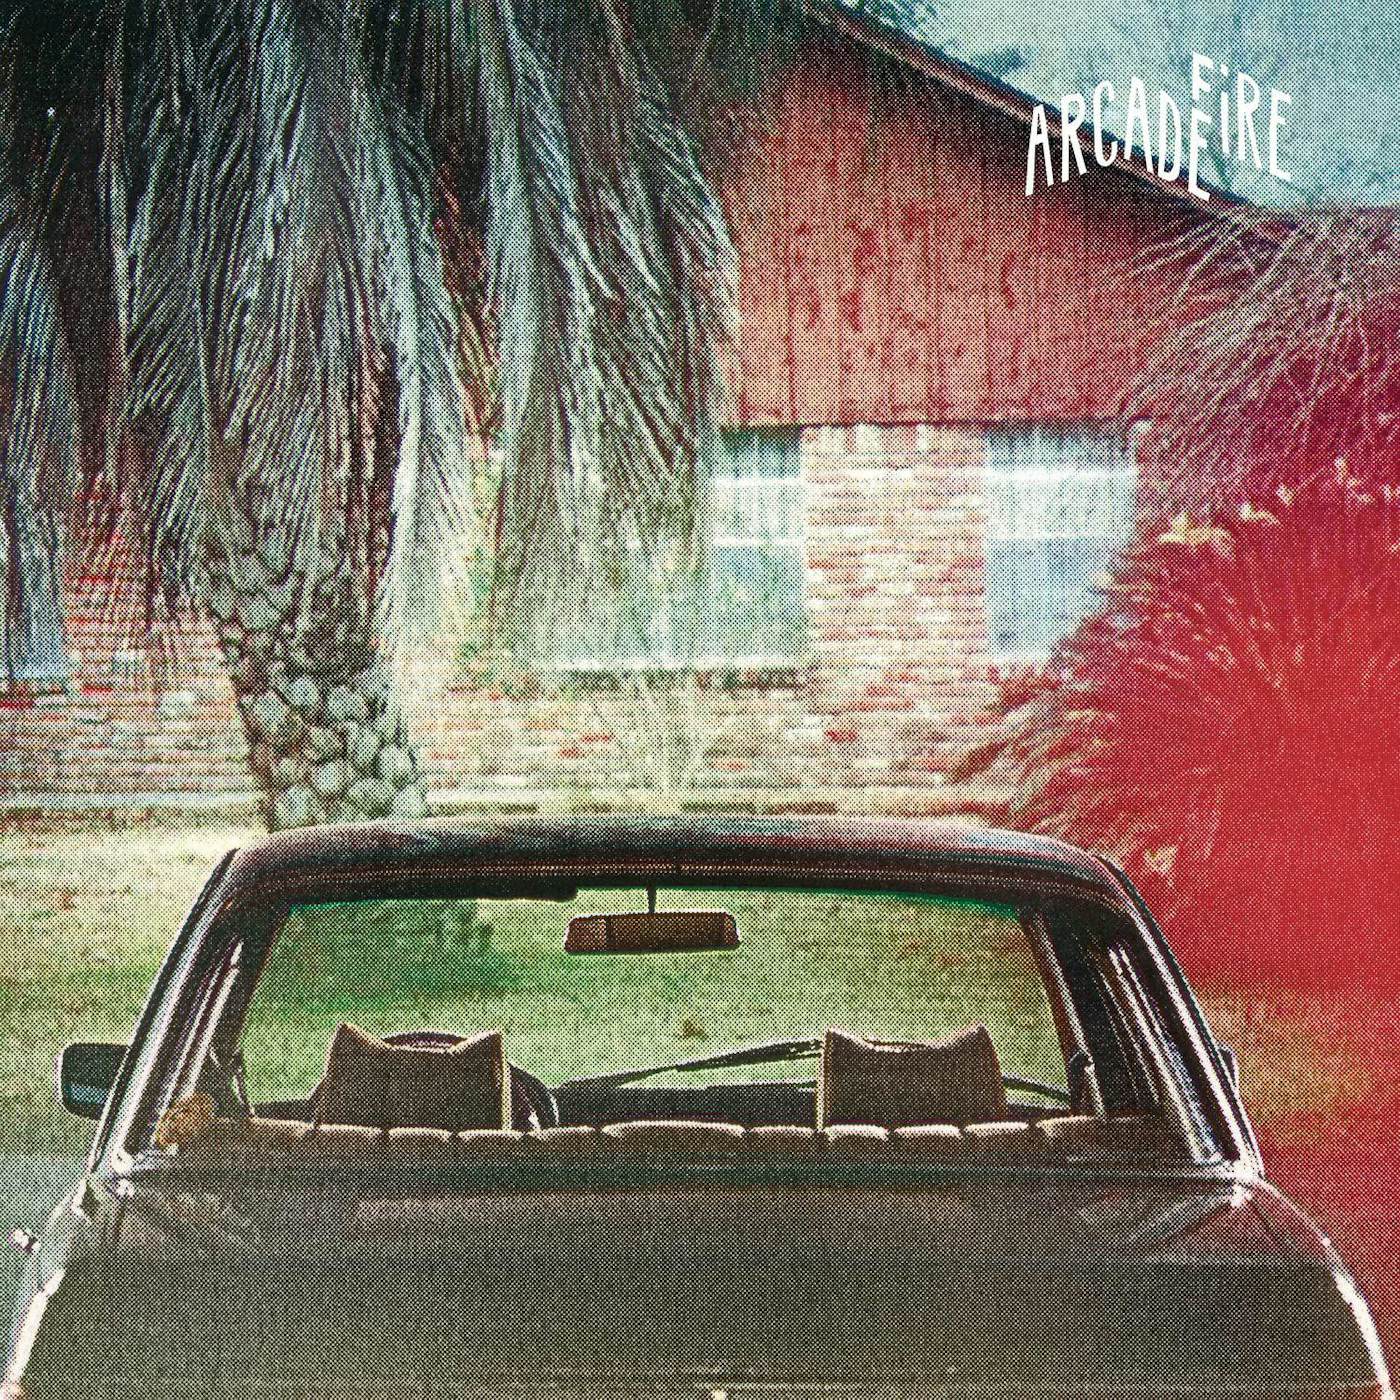 Arcade Fire Suburbs (2LP) Vinyl Record